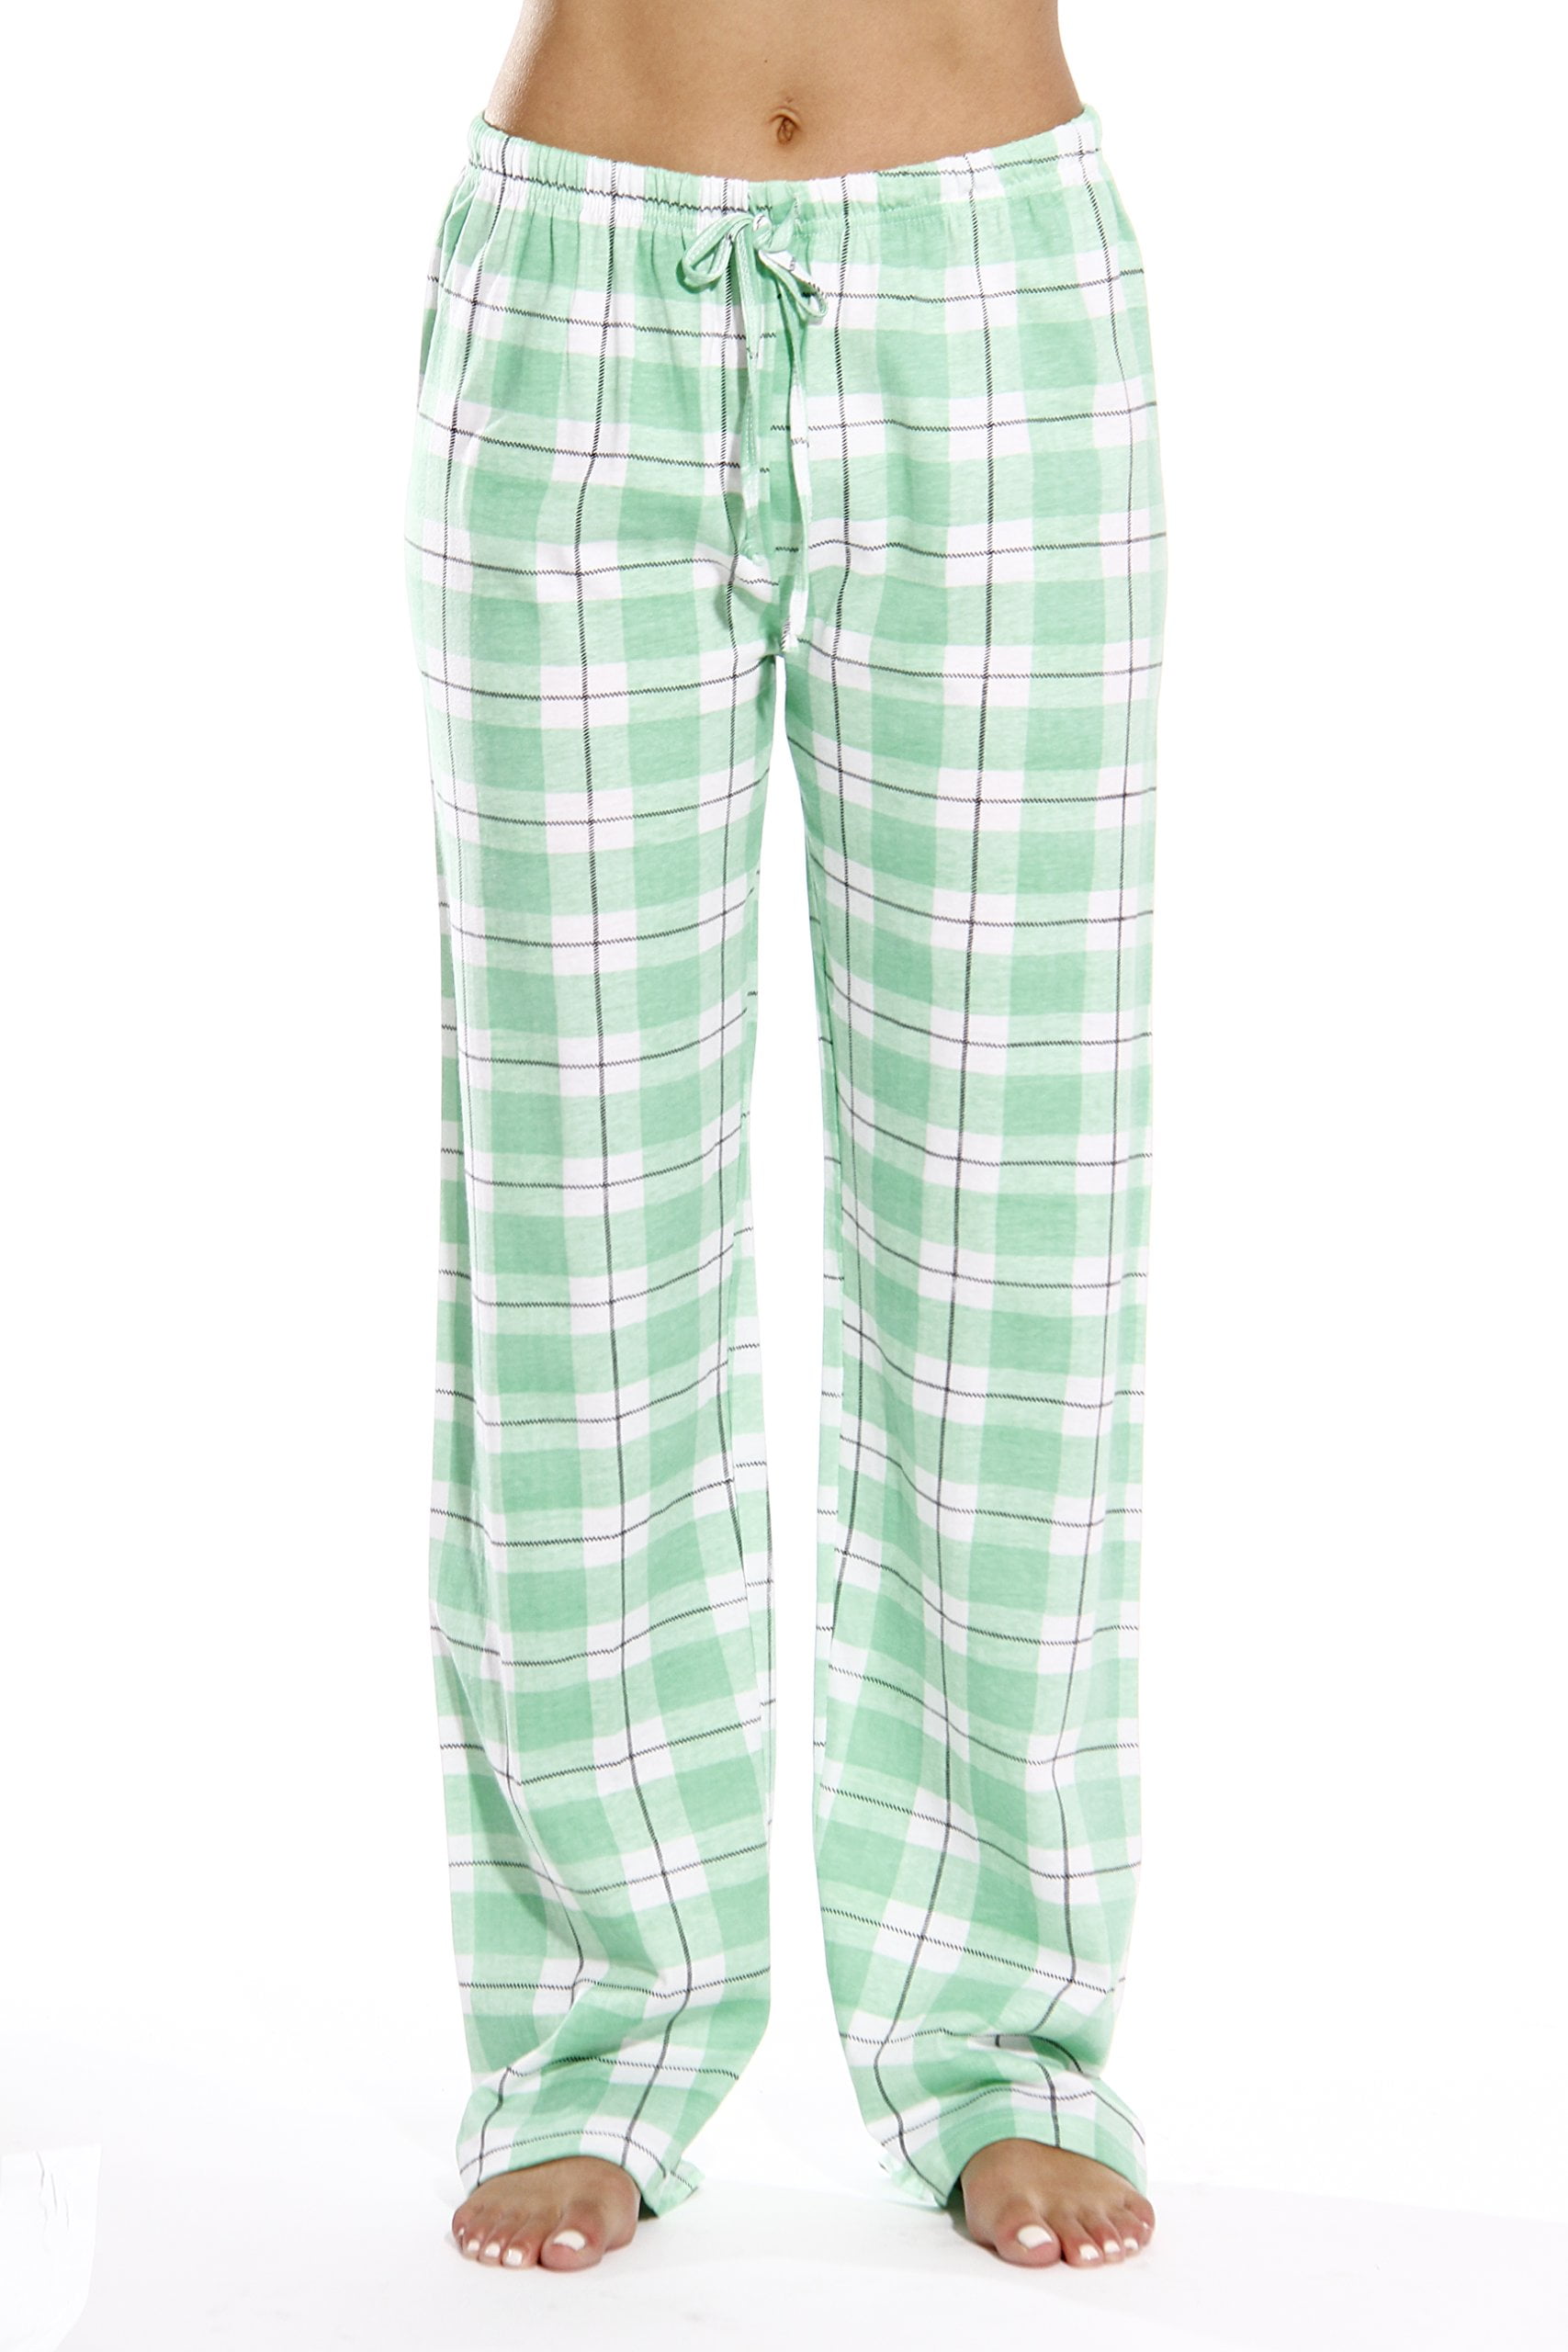 Just Love 100/% Cotton Jersey Women Plaid Pajama Pants Sleepwear